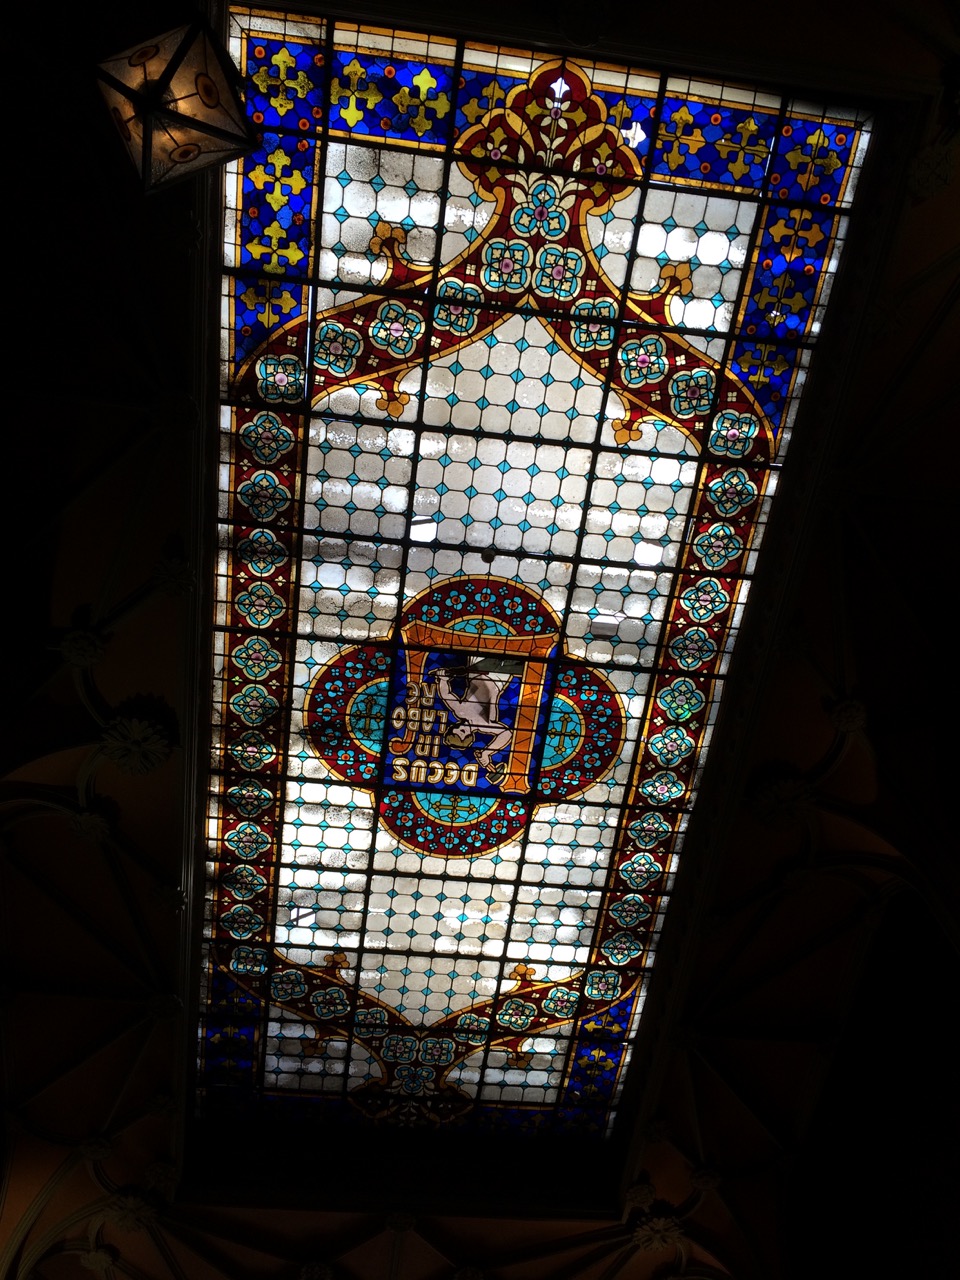 The ceiling of Livraria Lello